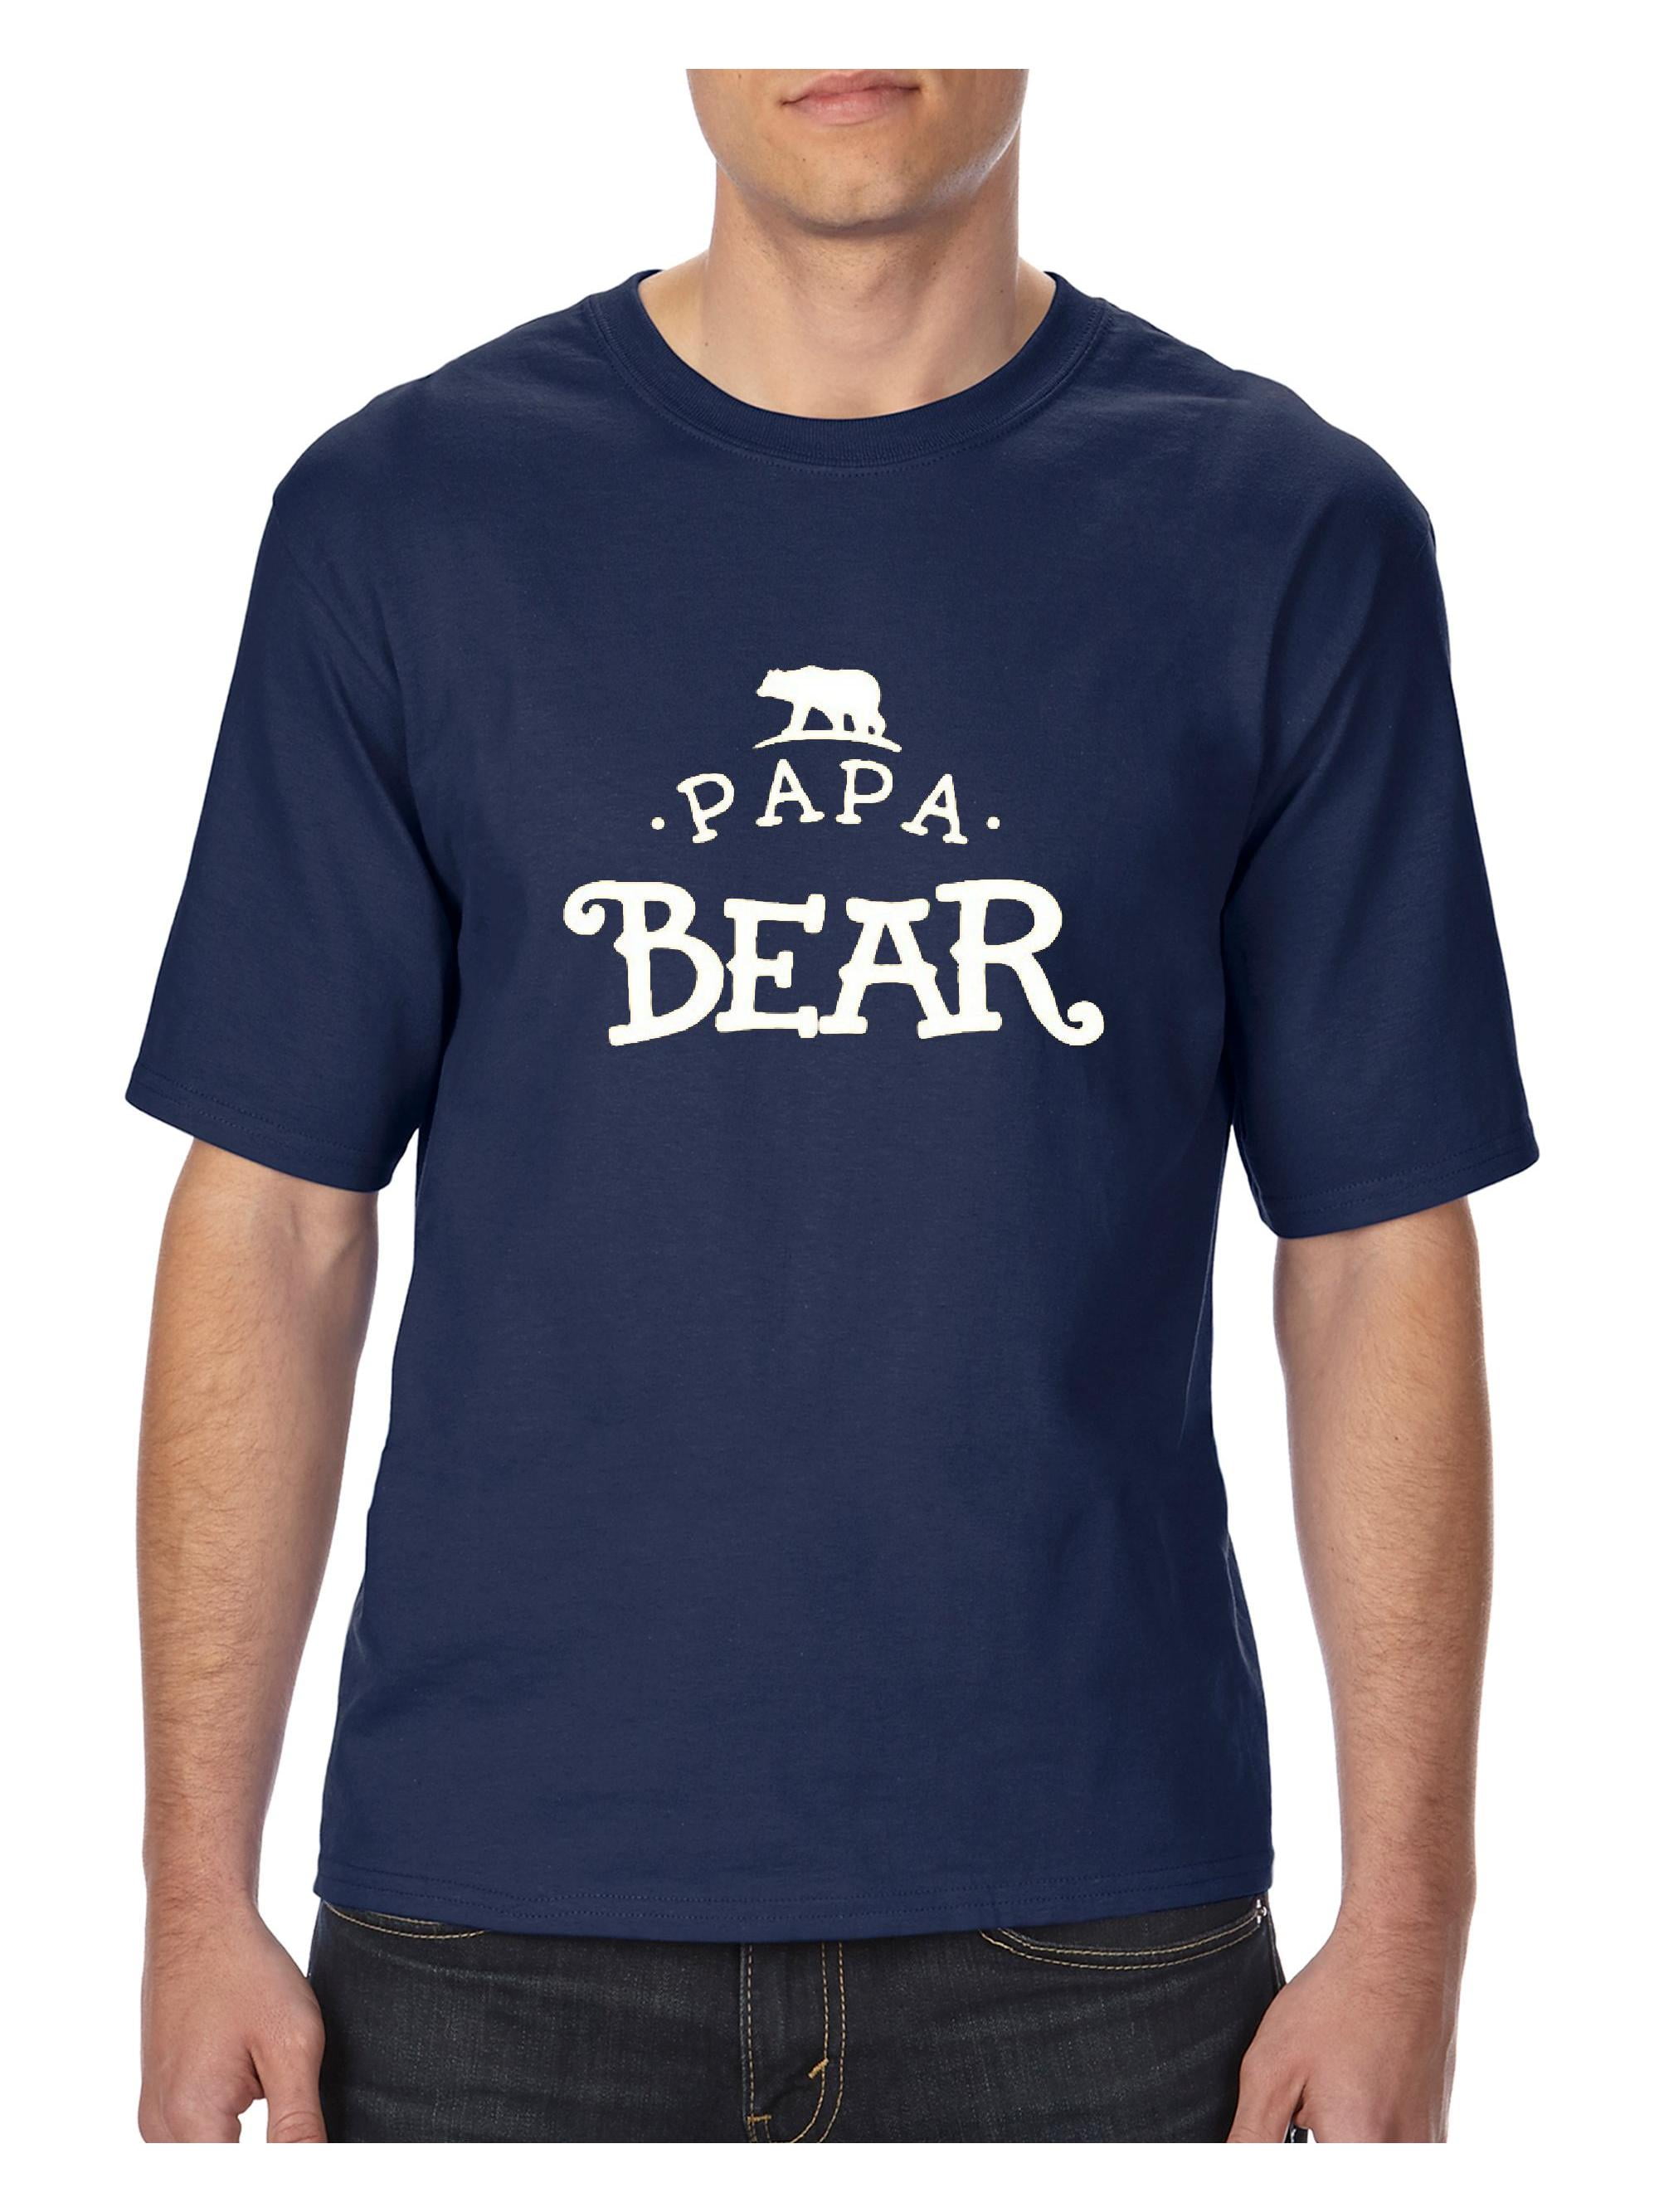 Big Men's T-Shirt - Papa Bear 